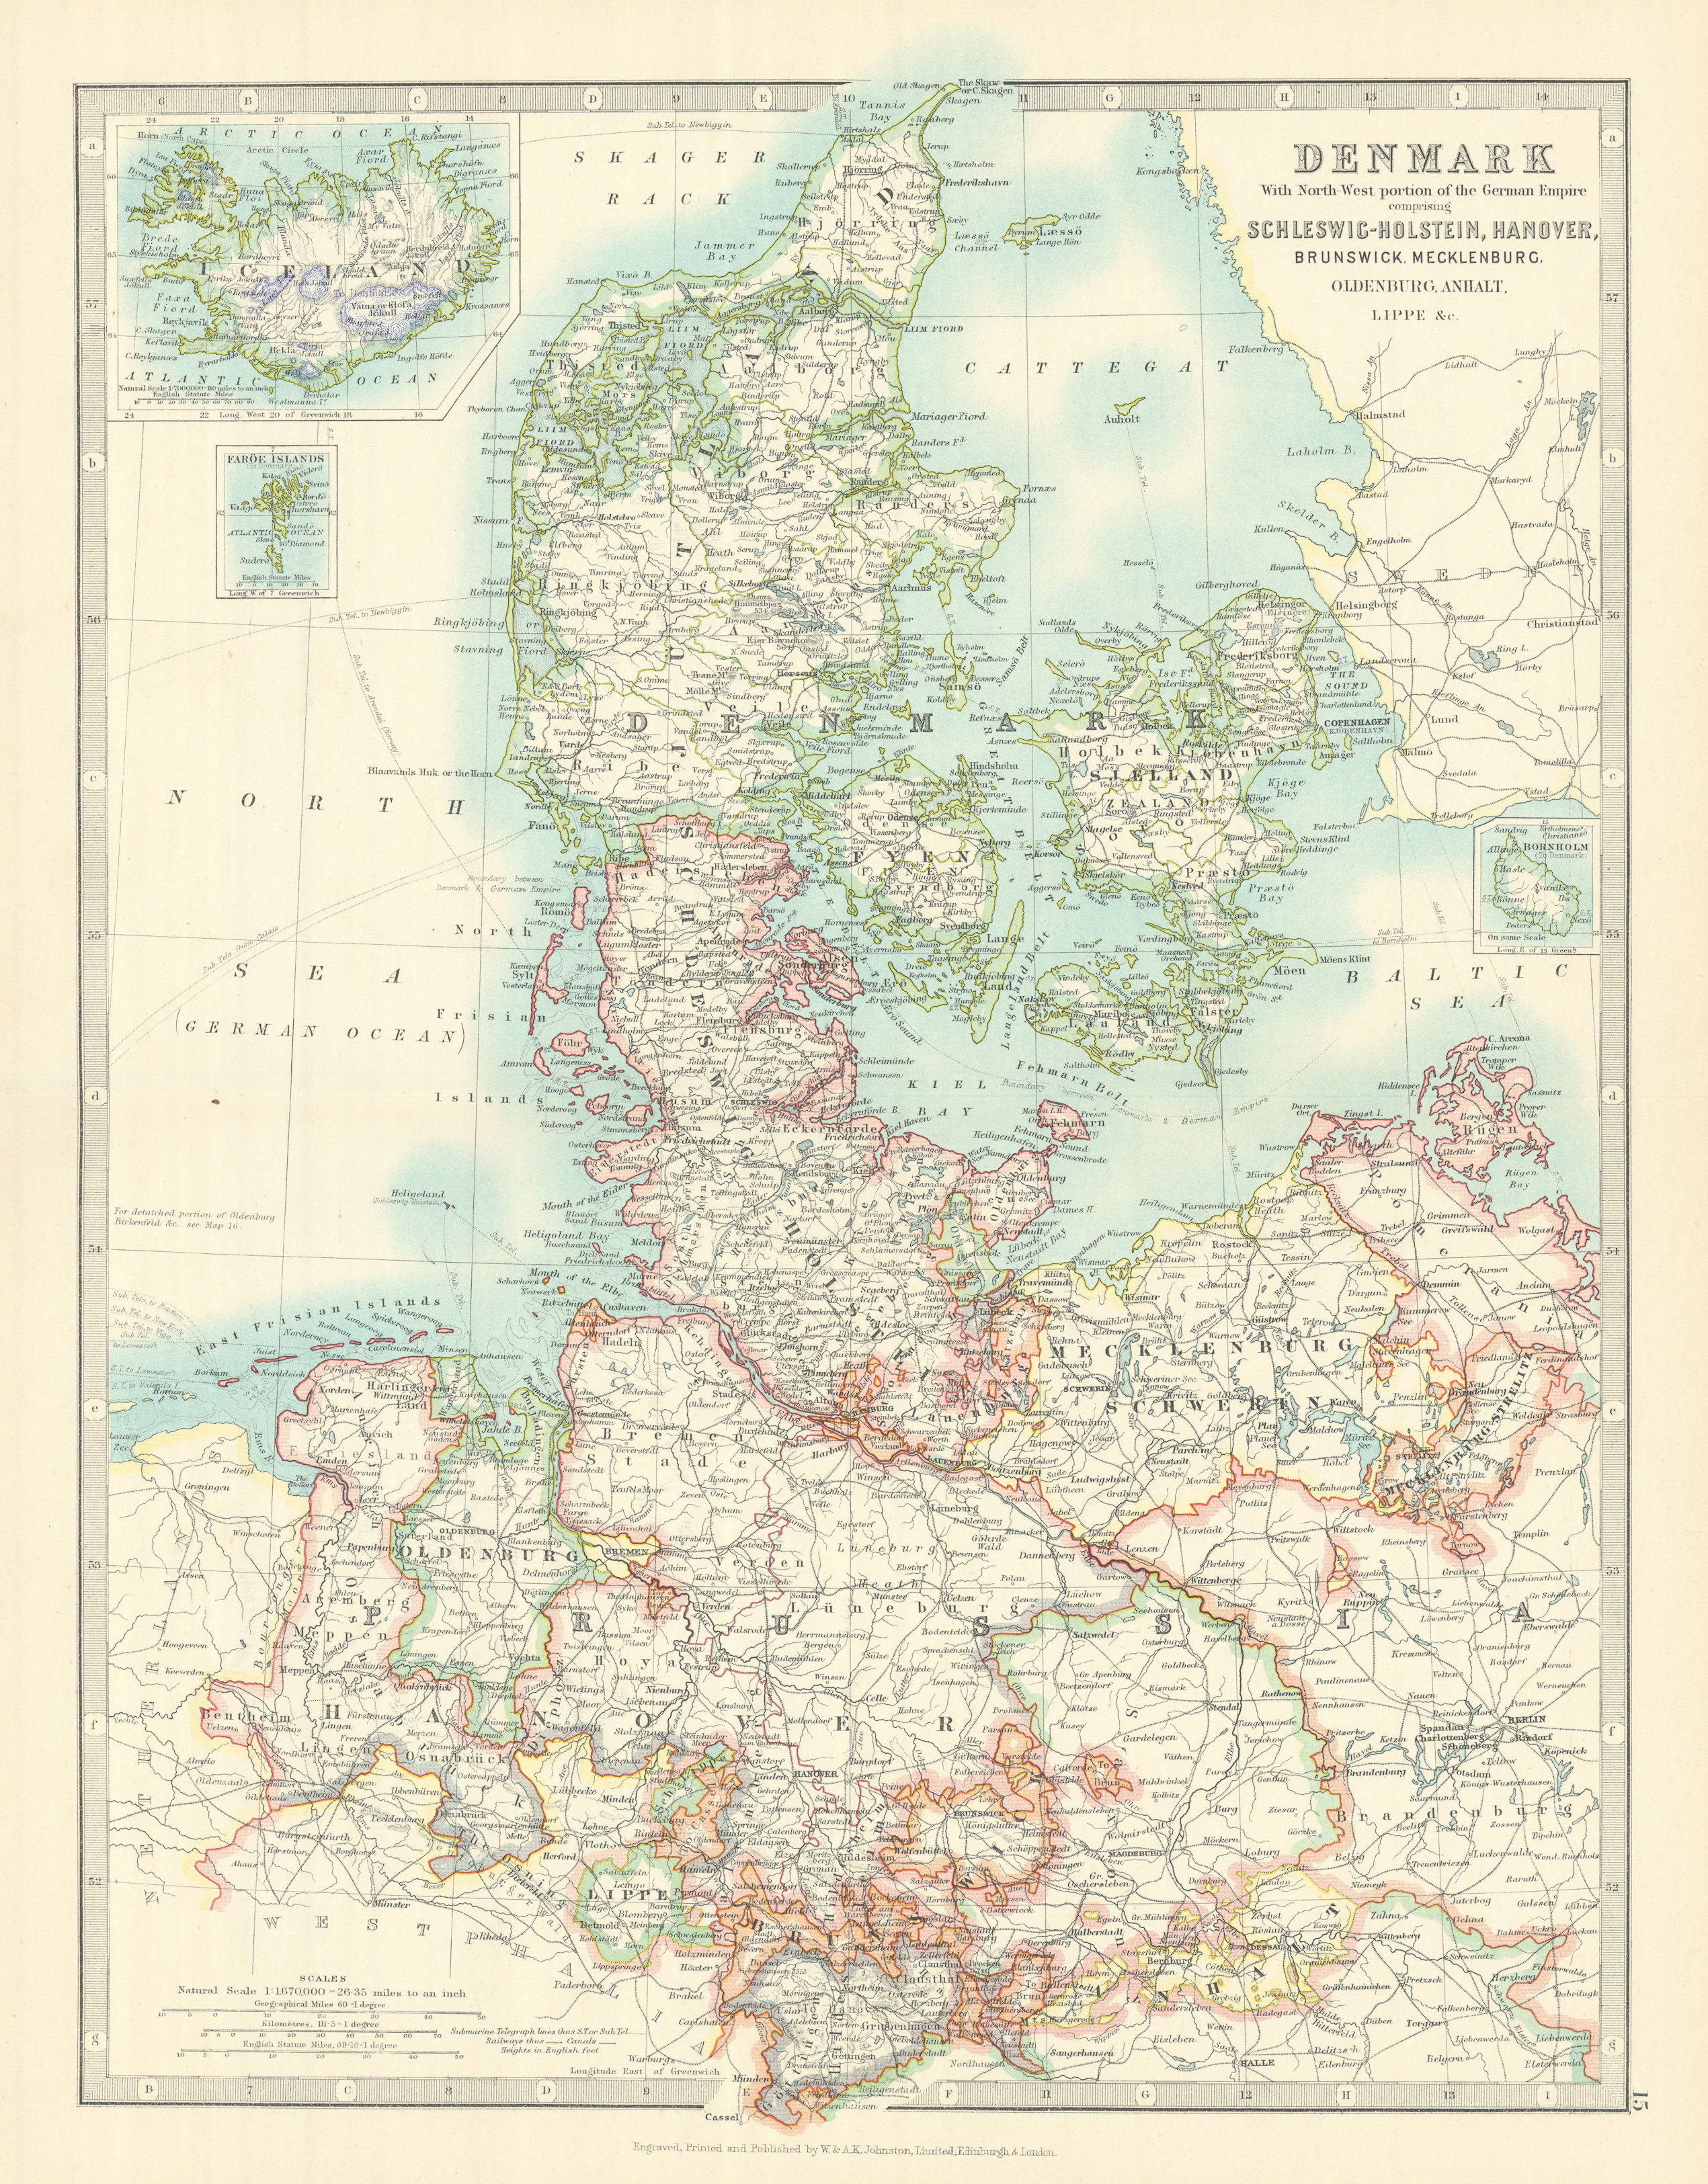 Associate Product DENMARK & NORTHERN GERMANY. Schleswig-Holstein Hanover. JOHNSTON 1913 old map